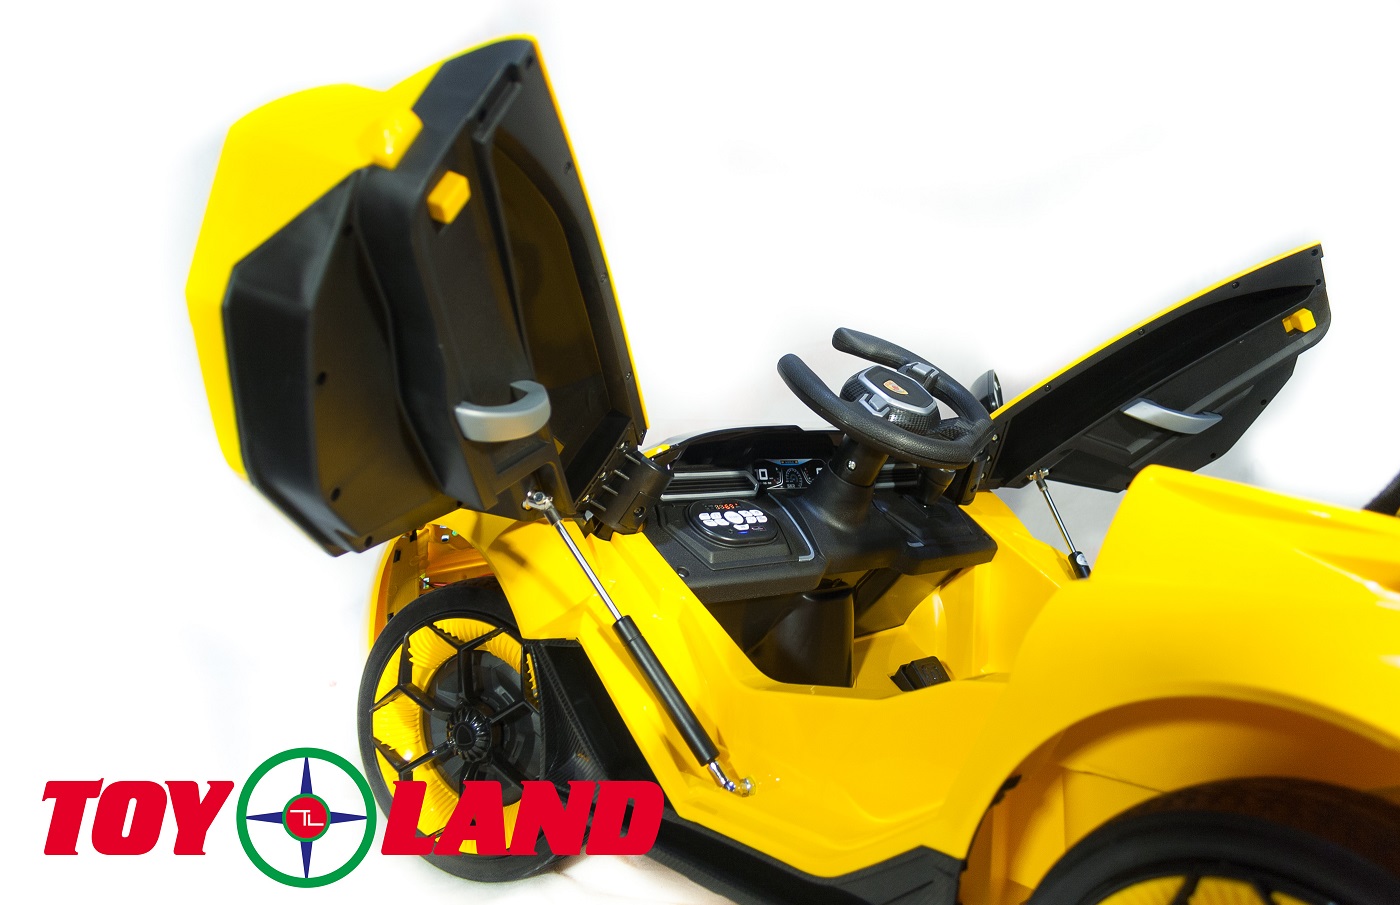 Электромобиль ToyLand Lamborghini YHK2881 желтого цвета 